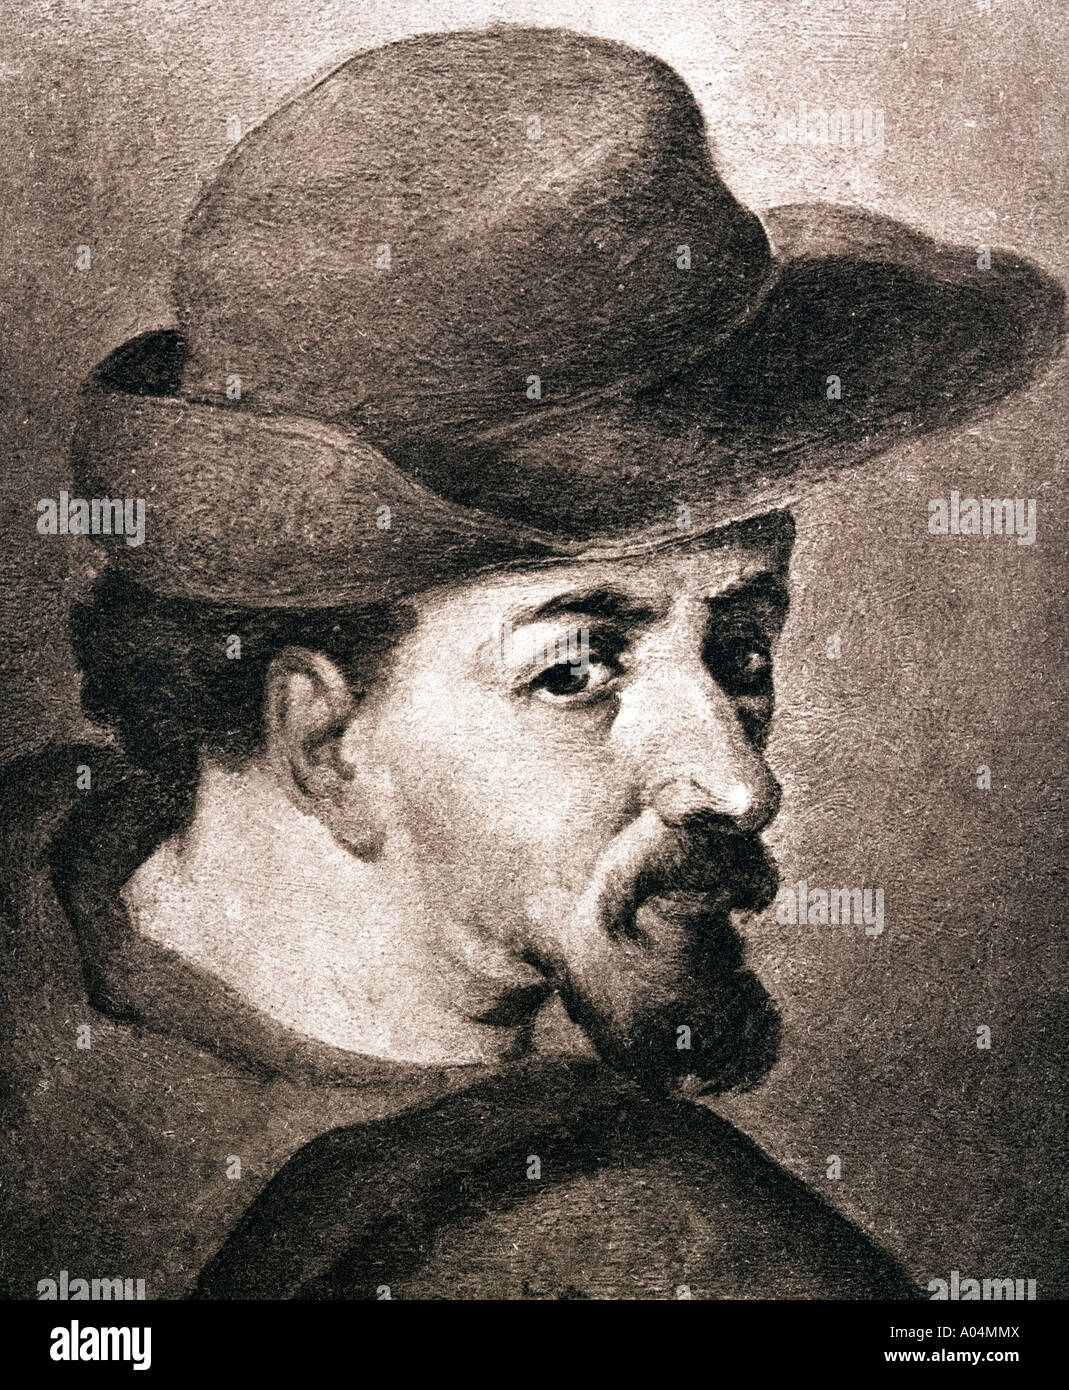 Portrait of Miguel Saavedra de Cervantes, 1547 - 1616. Spanish writer- After the artist Francisco Pacheco. Stock Photo